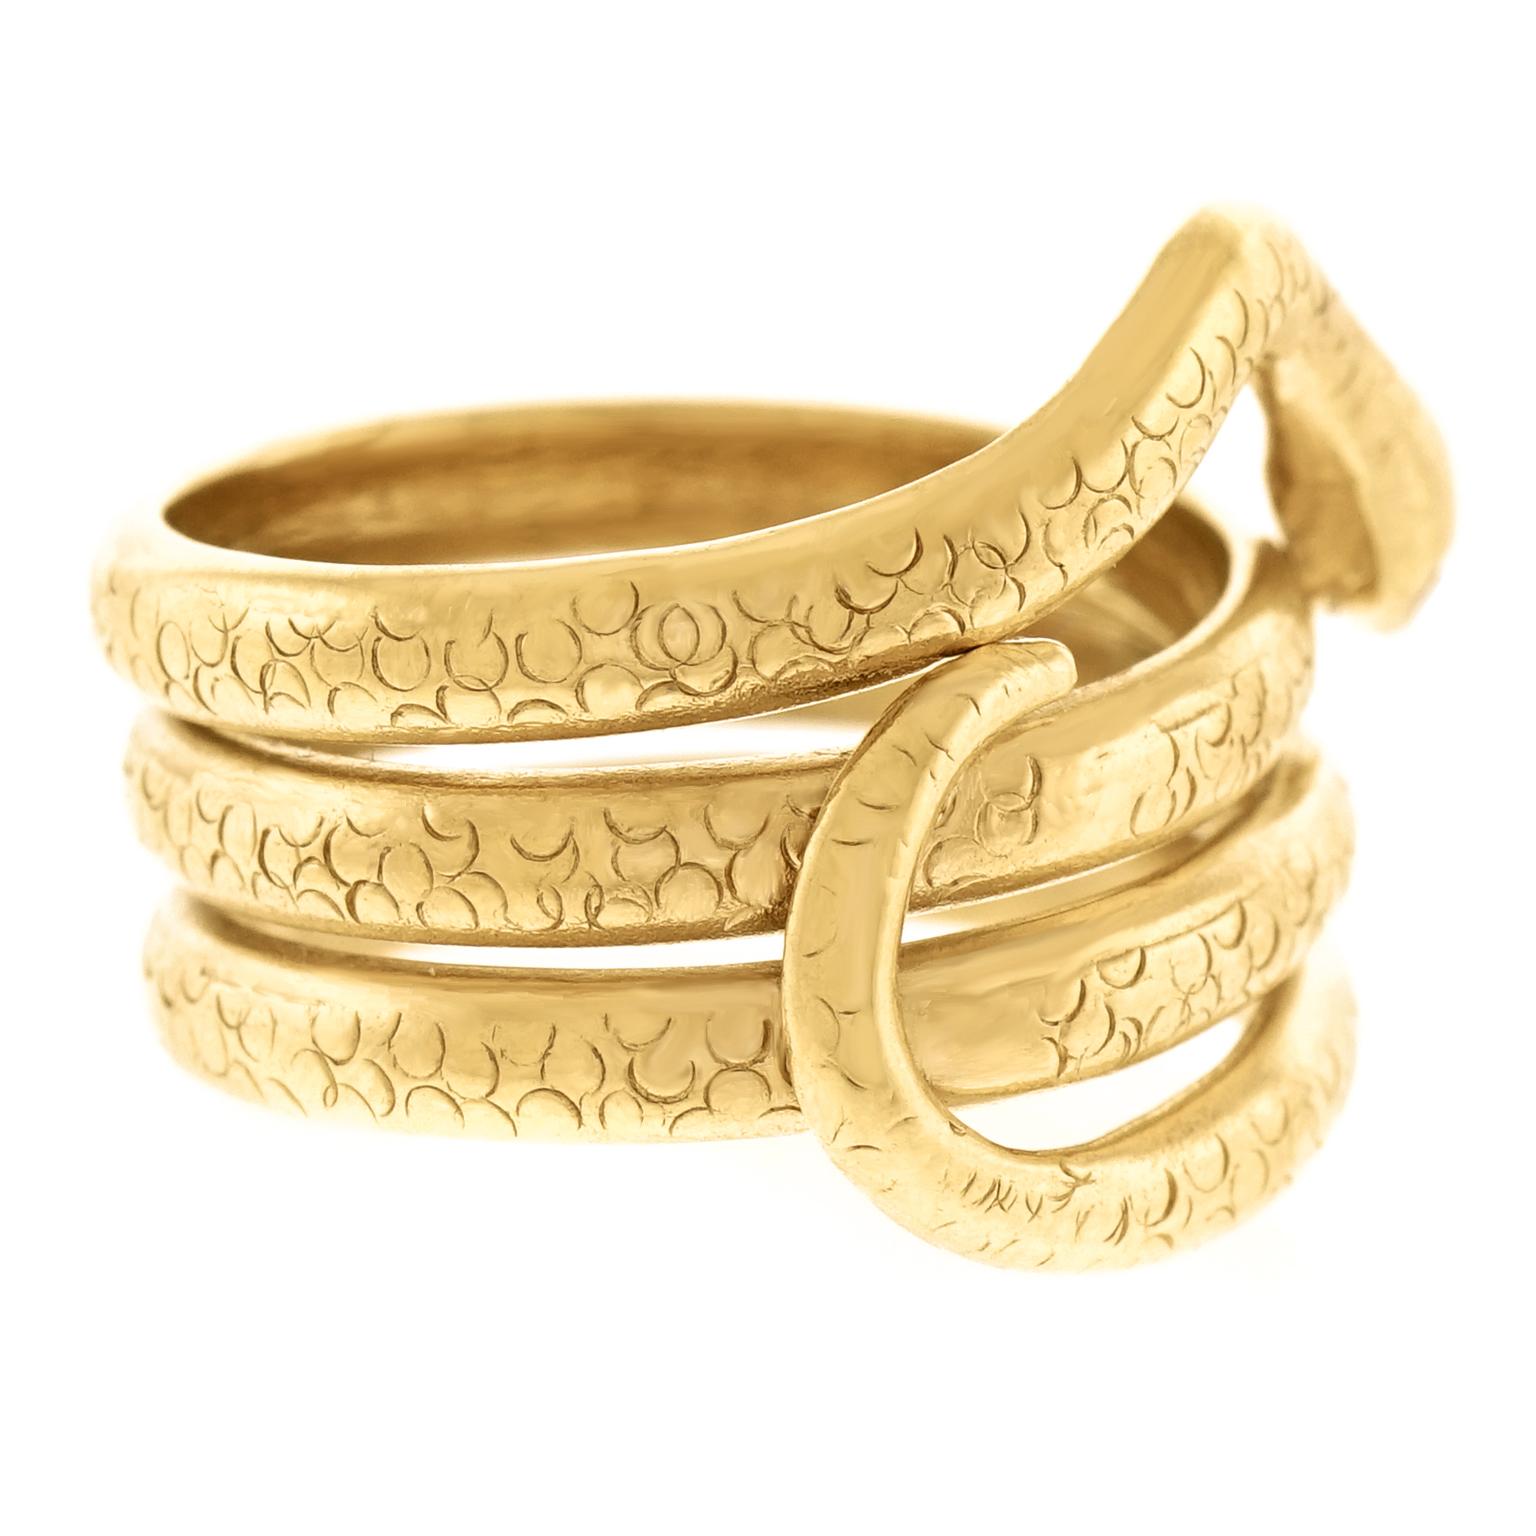 Antique Gold Snake Ring 4